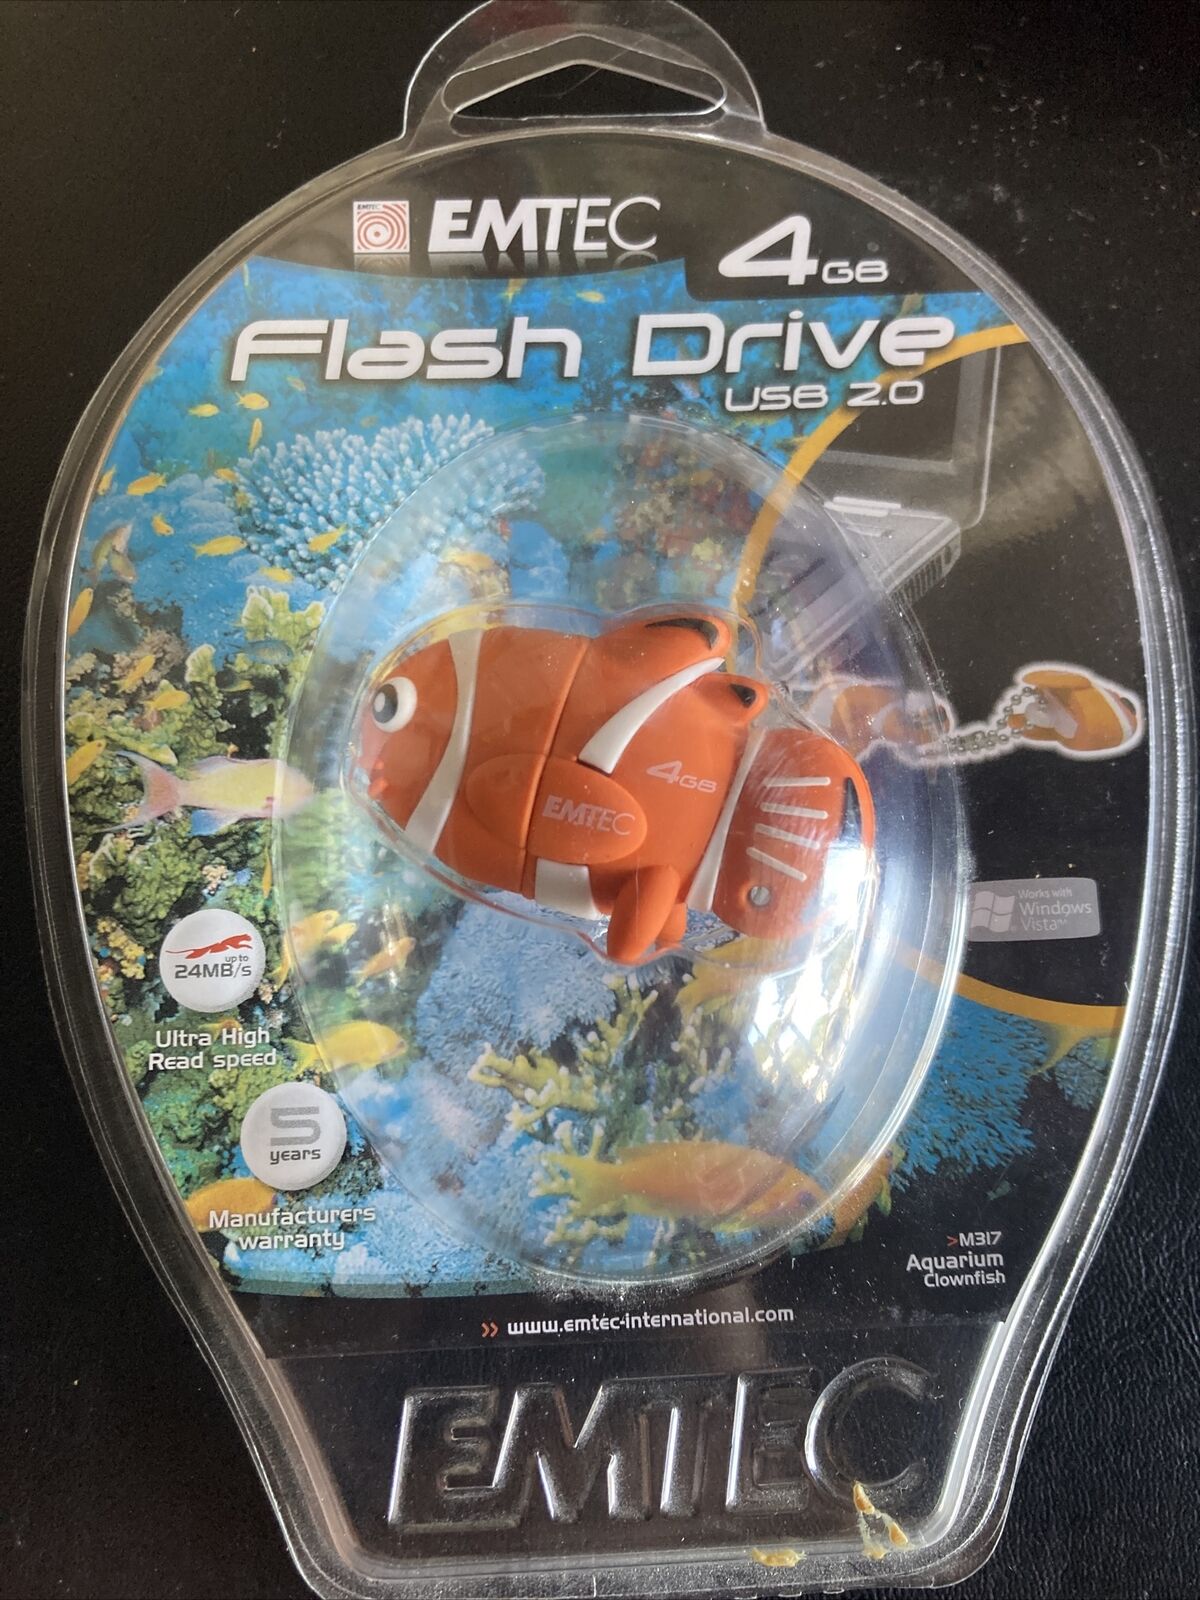 EMTEC Clownfish 4 GB USB Flash Drive factory sealed